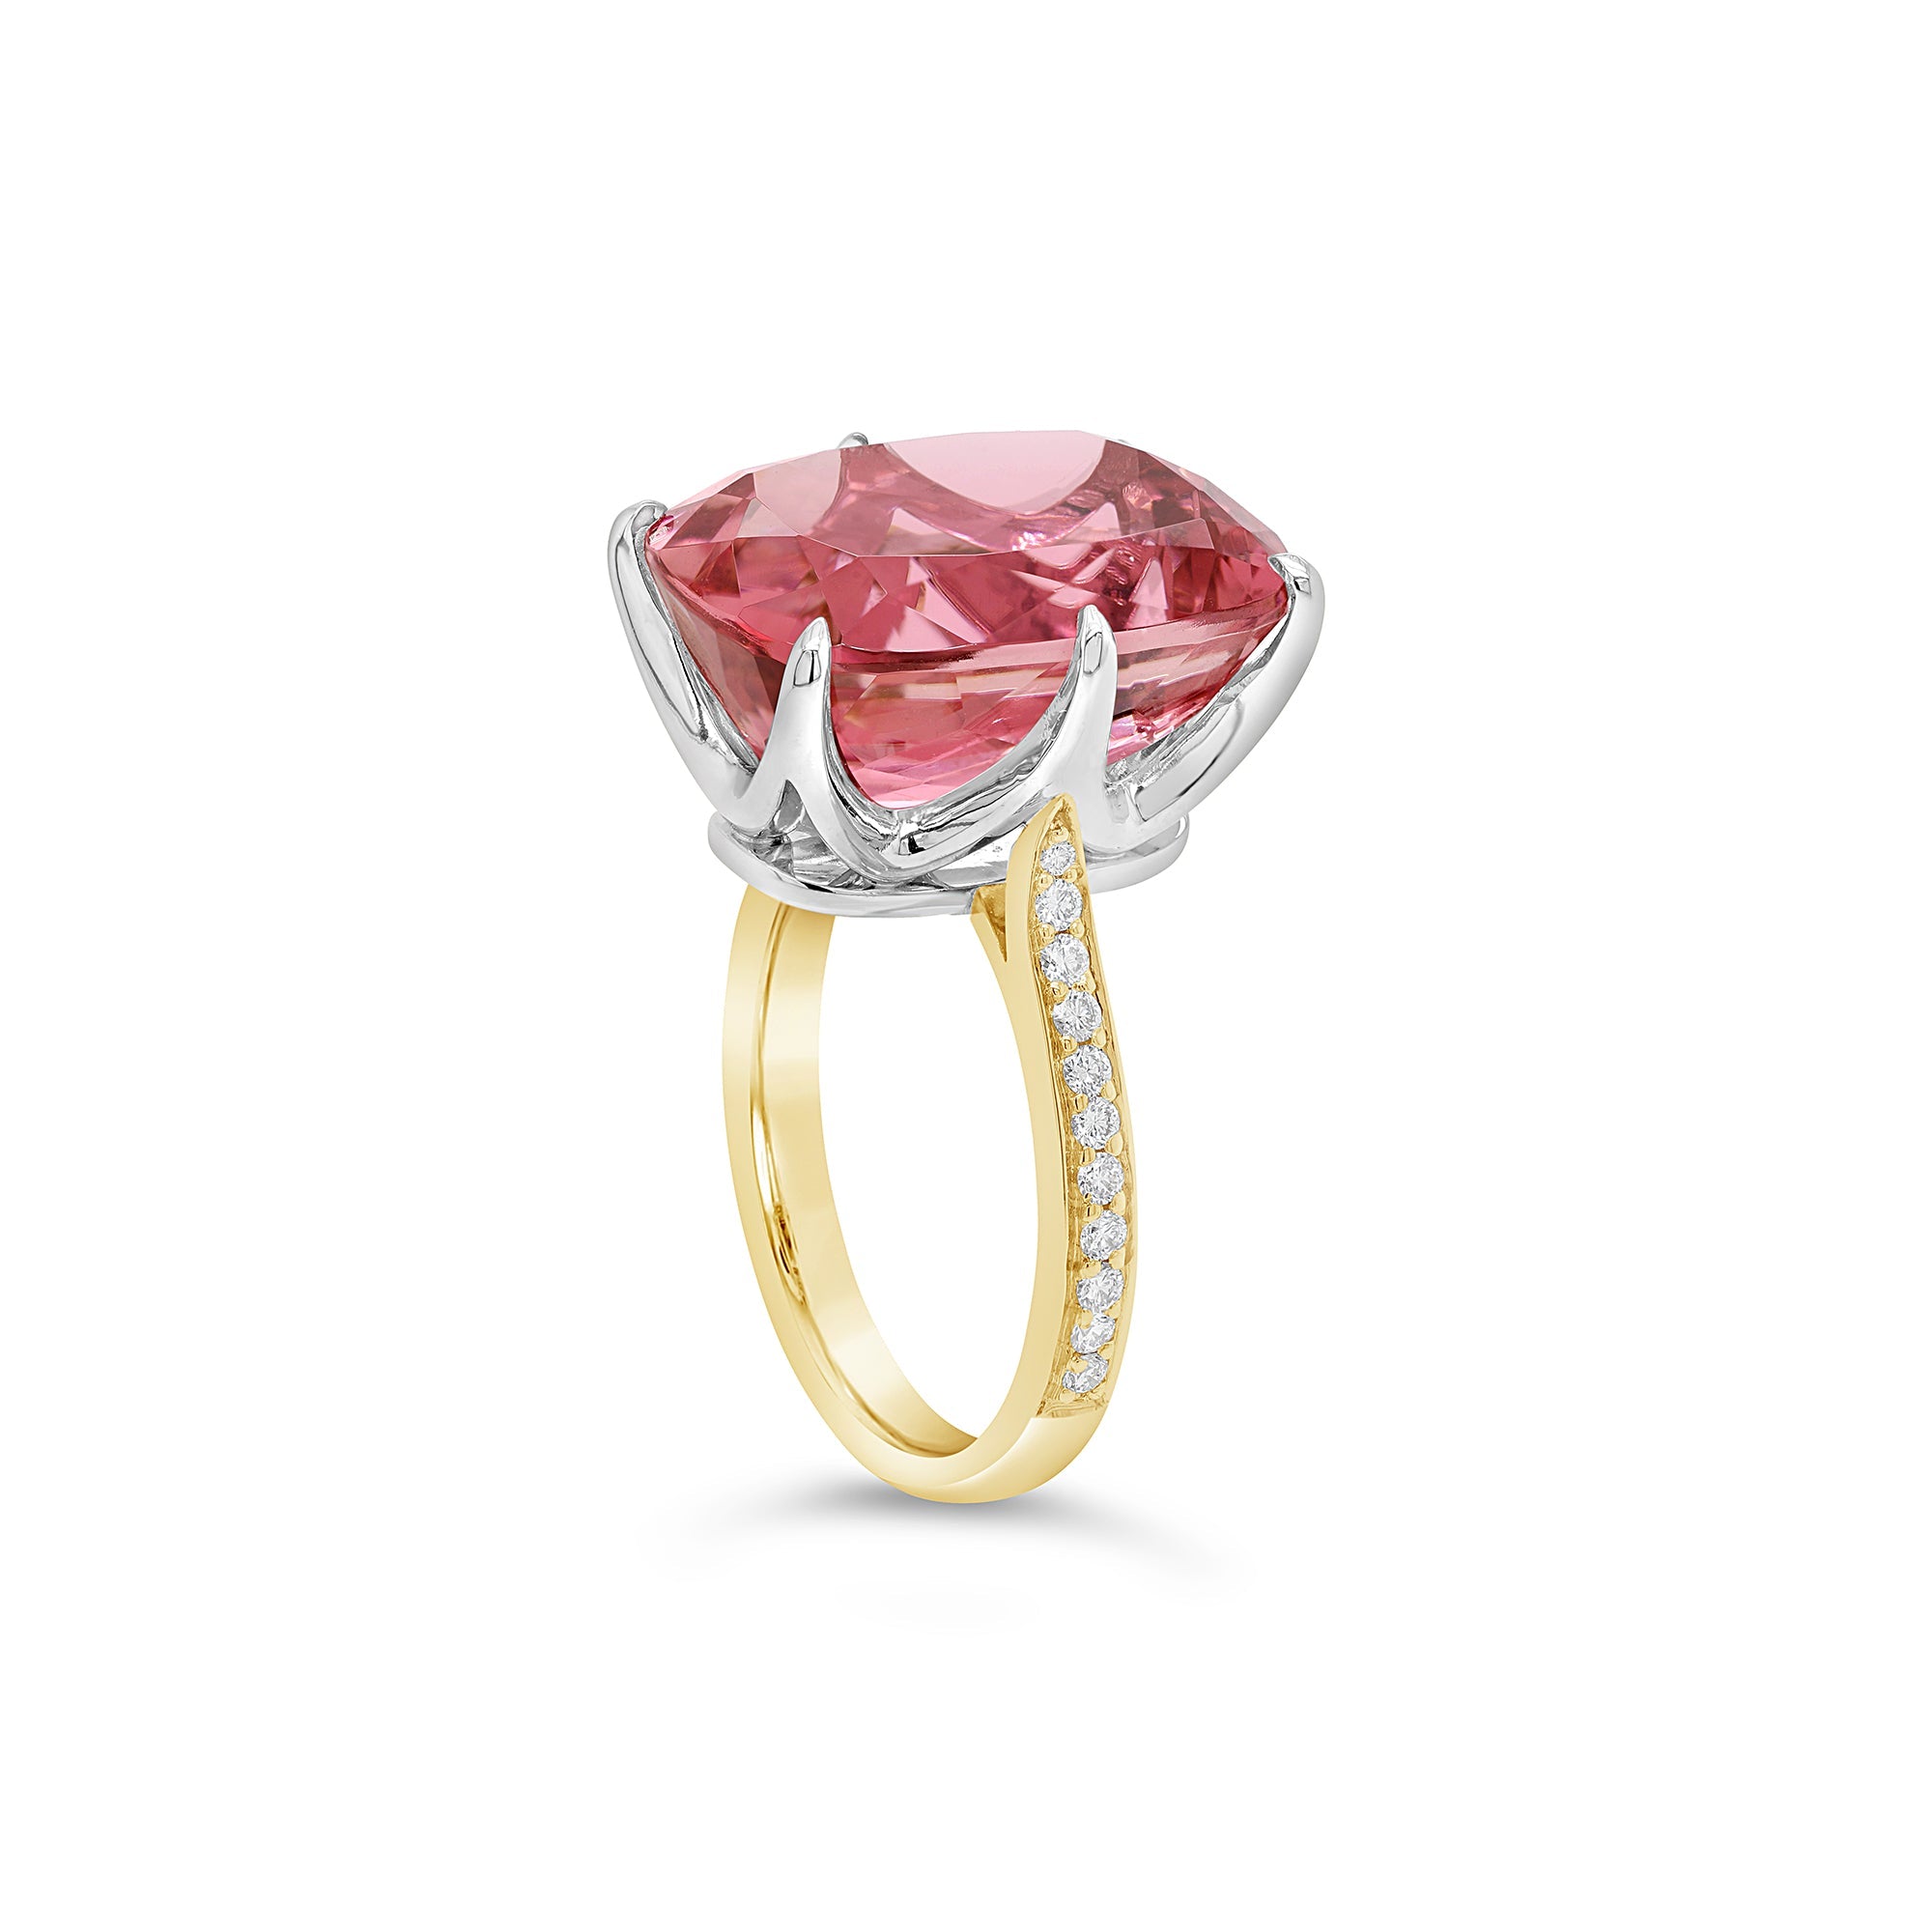   Pink Tourmaline & Diamond Cocktail Ring